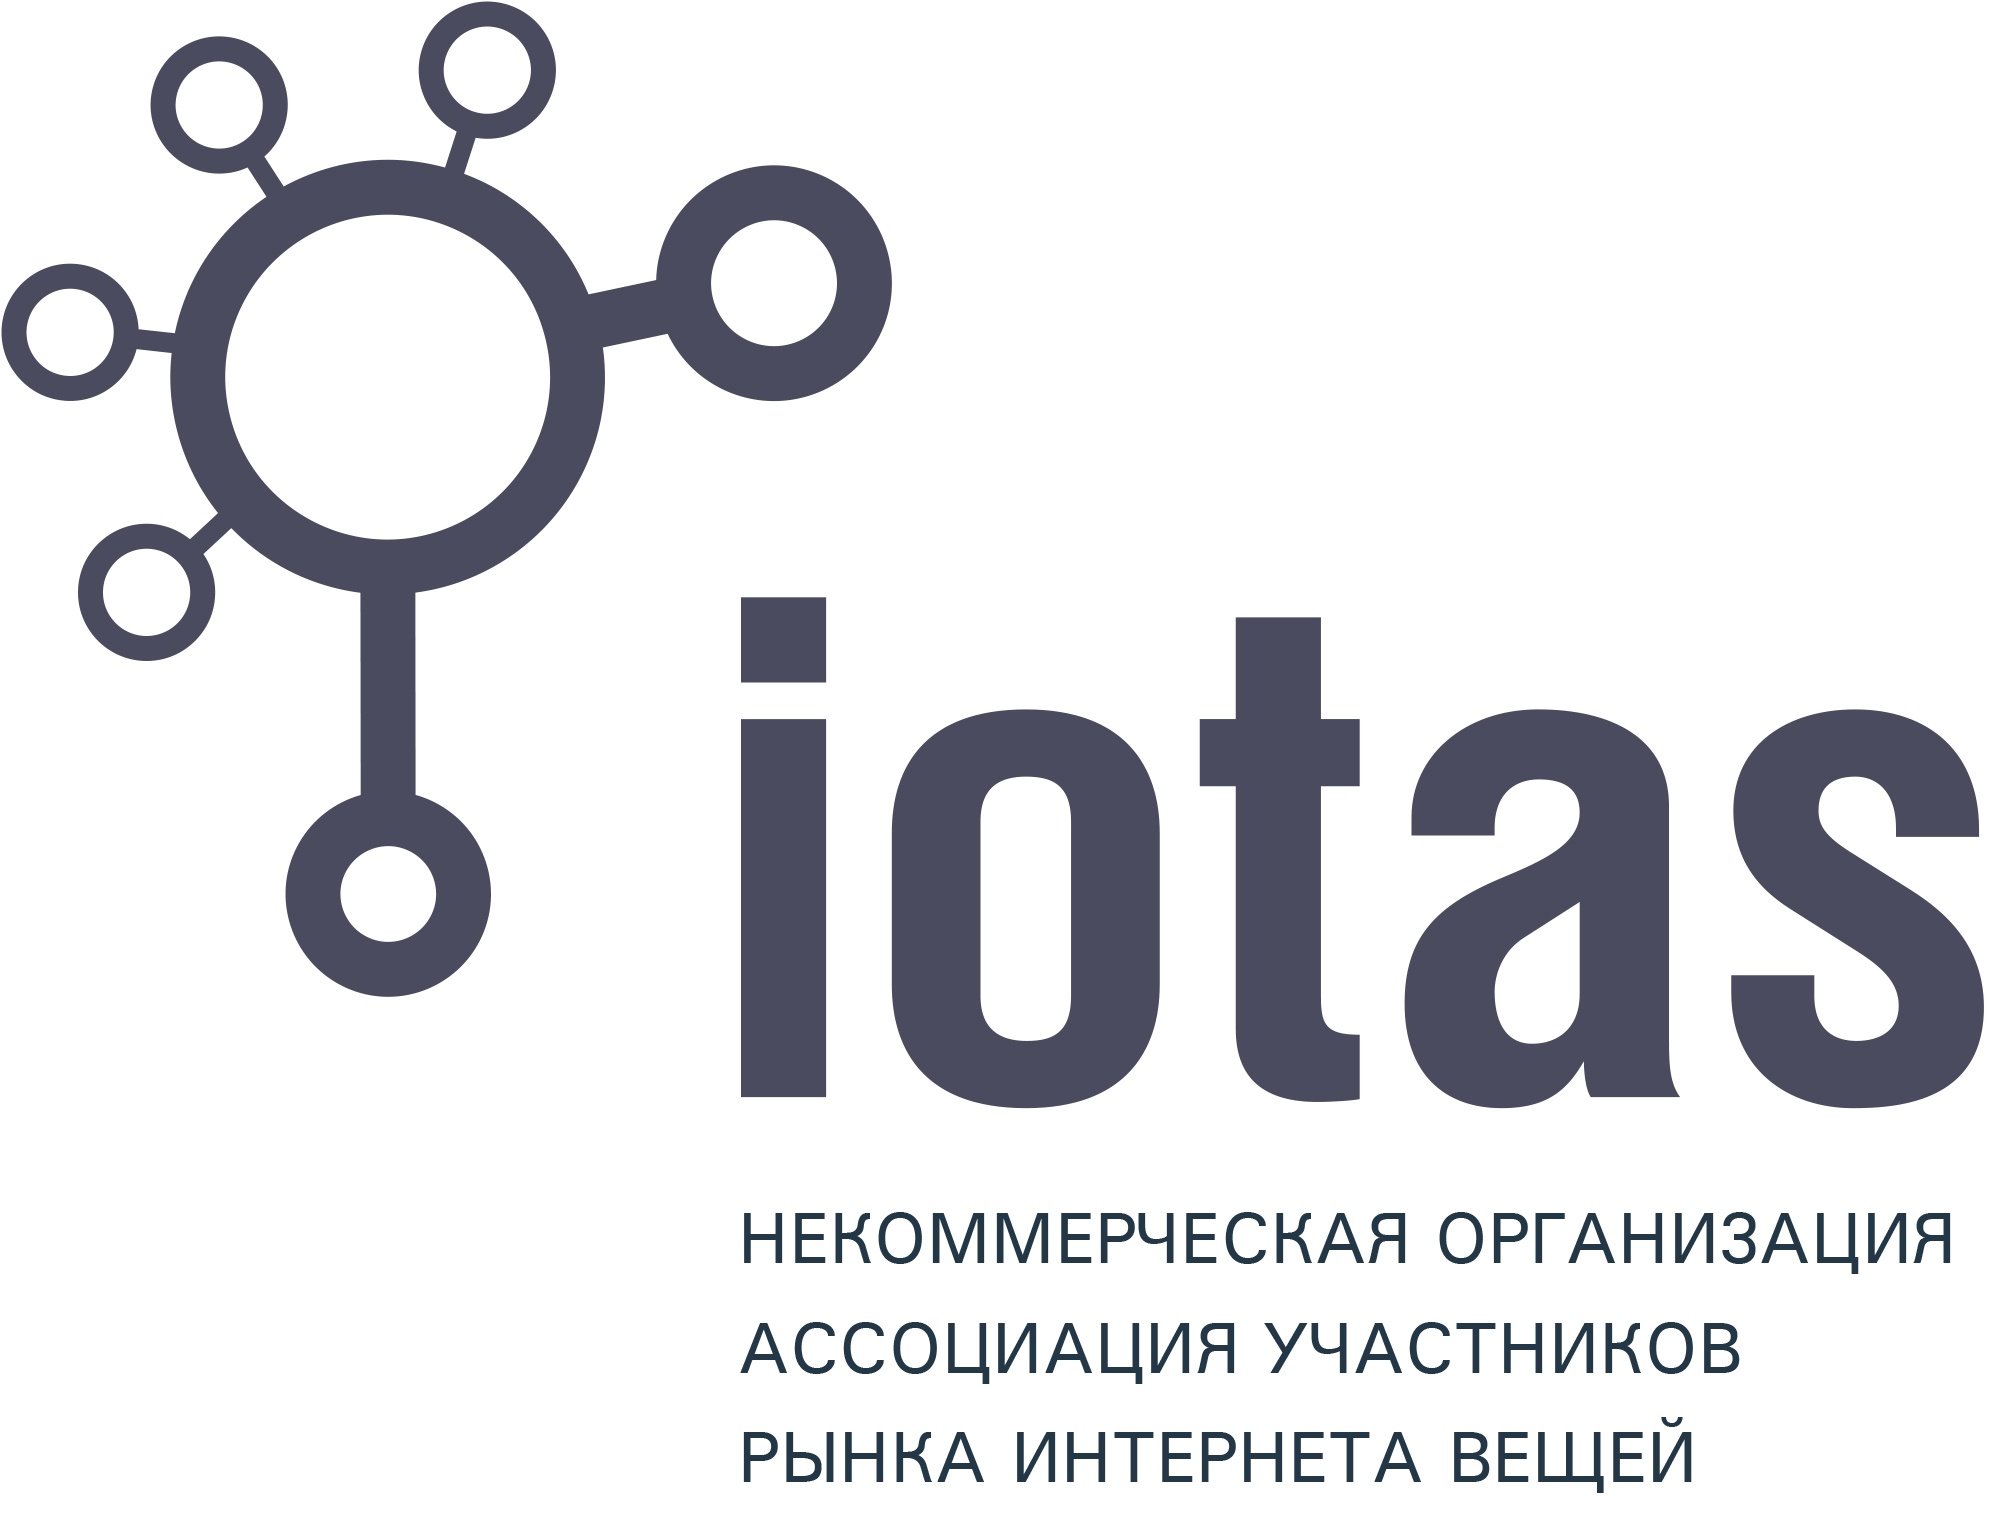 Iotas_logo_1_